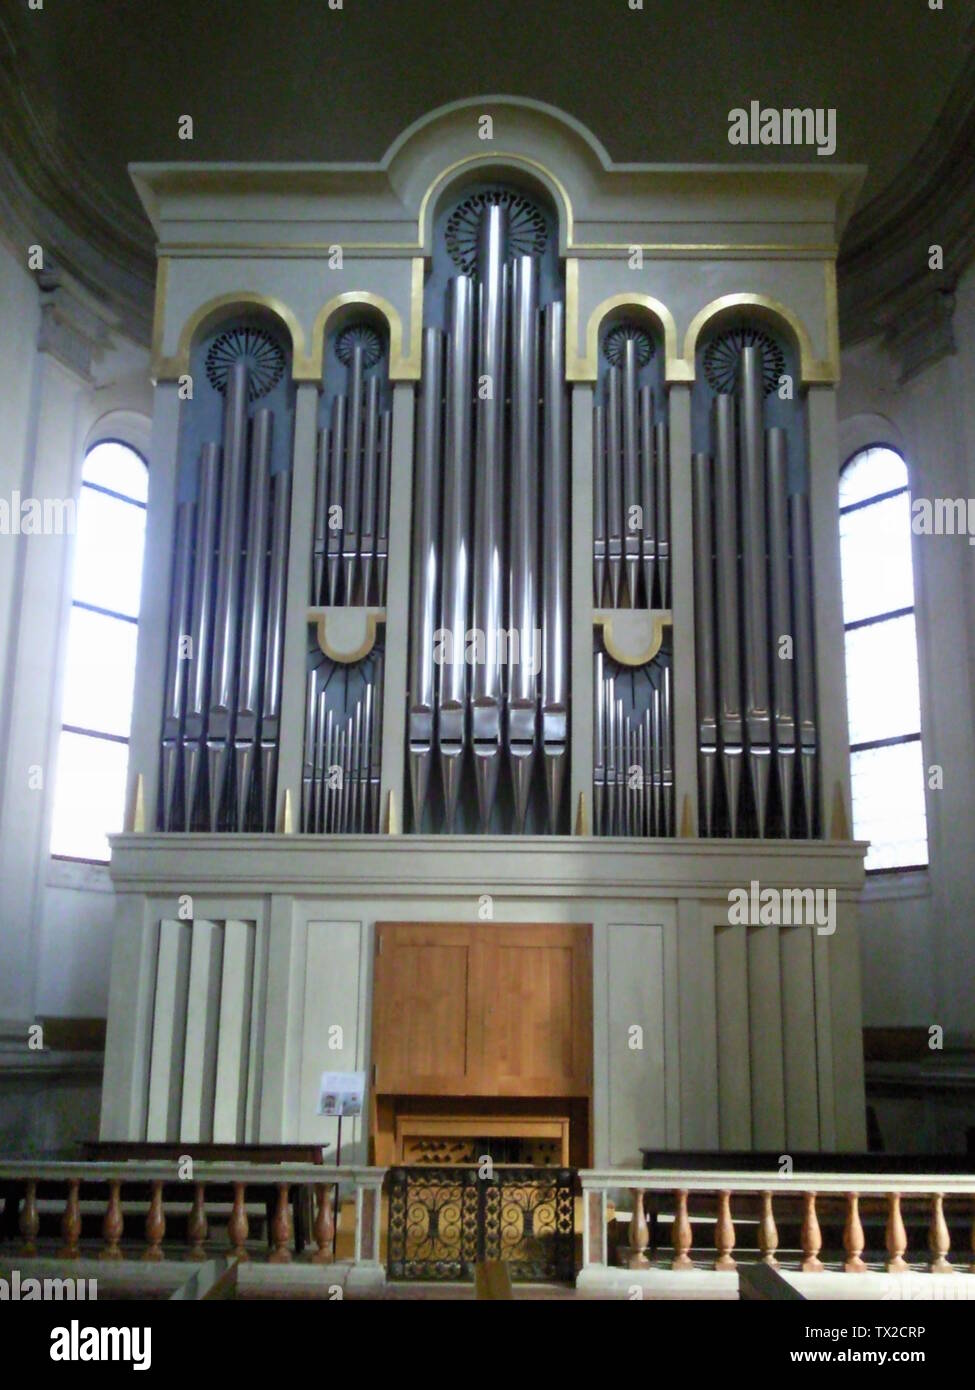 Organo Kuhn-Hradetzky del Duomo di Treviso; 8 May 2011; Own work; Utente:Ffeeddee; Stock Photo